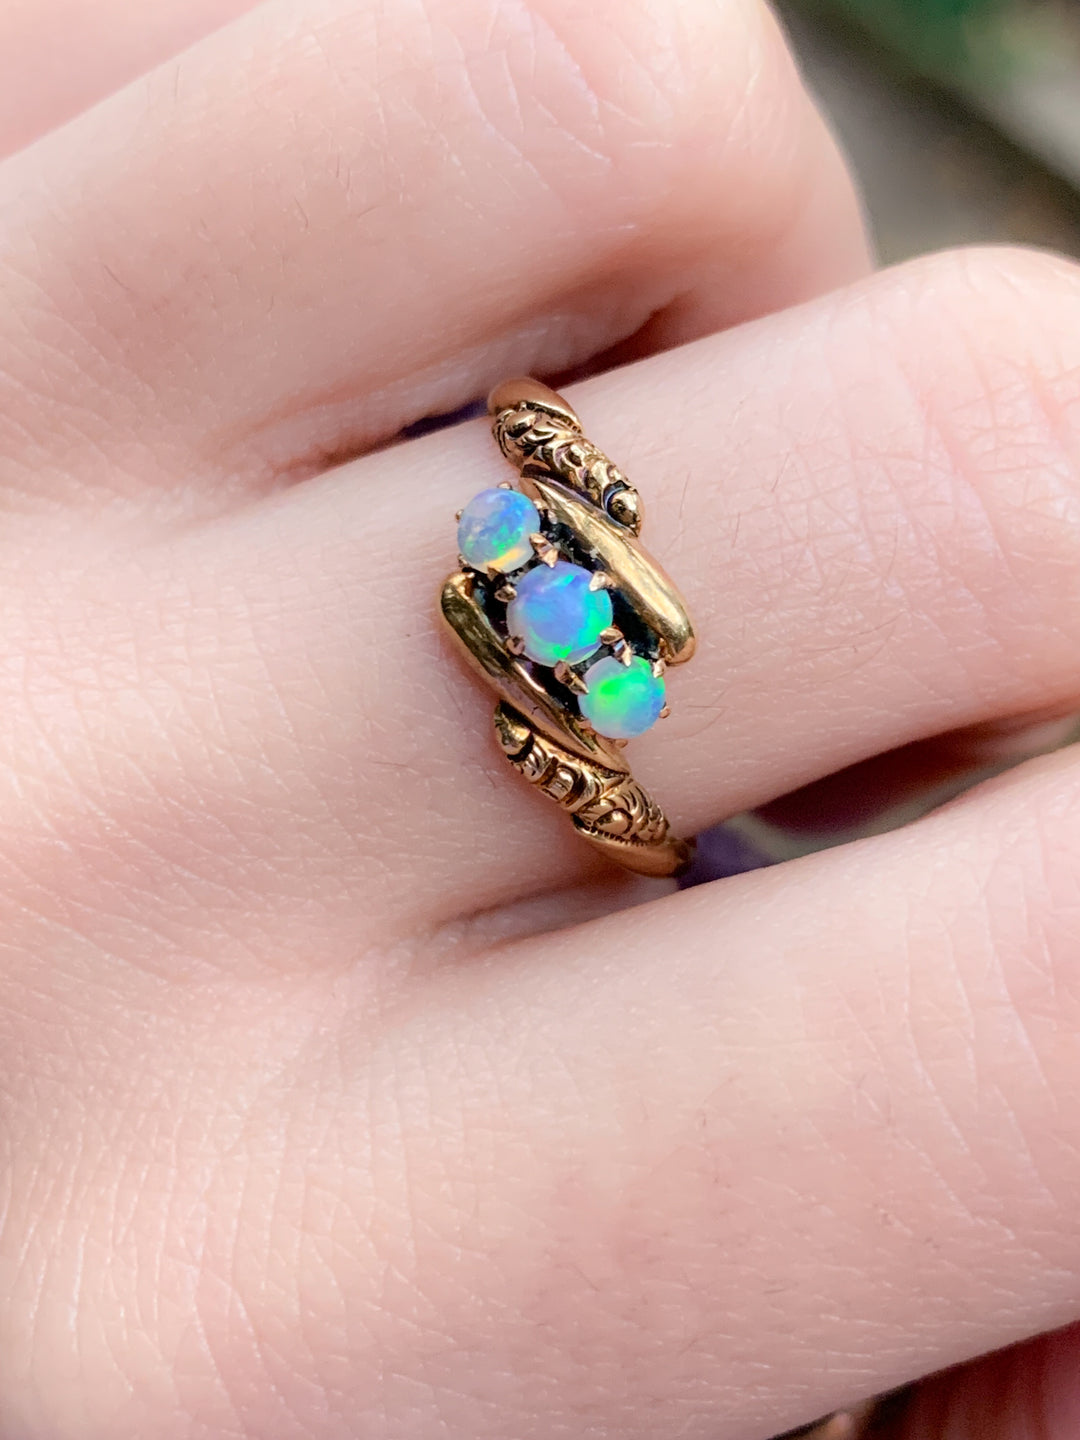 Exceptional American Australian Opal Ring in 14k + 14k Three Stone Diamond Ring